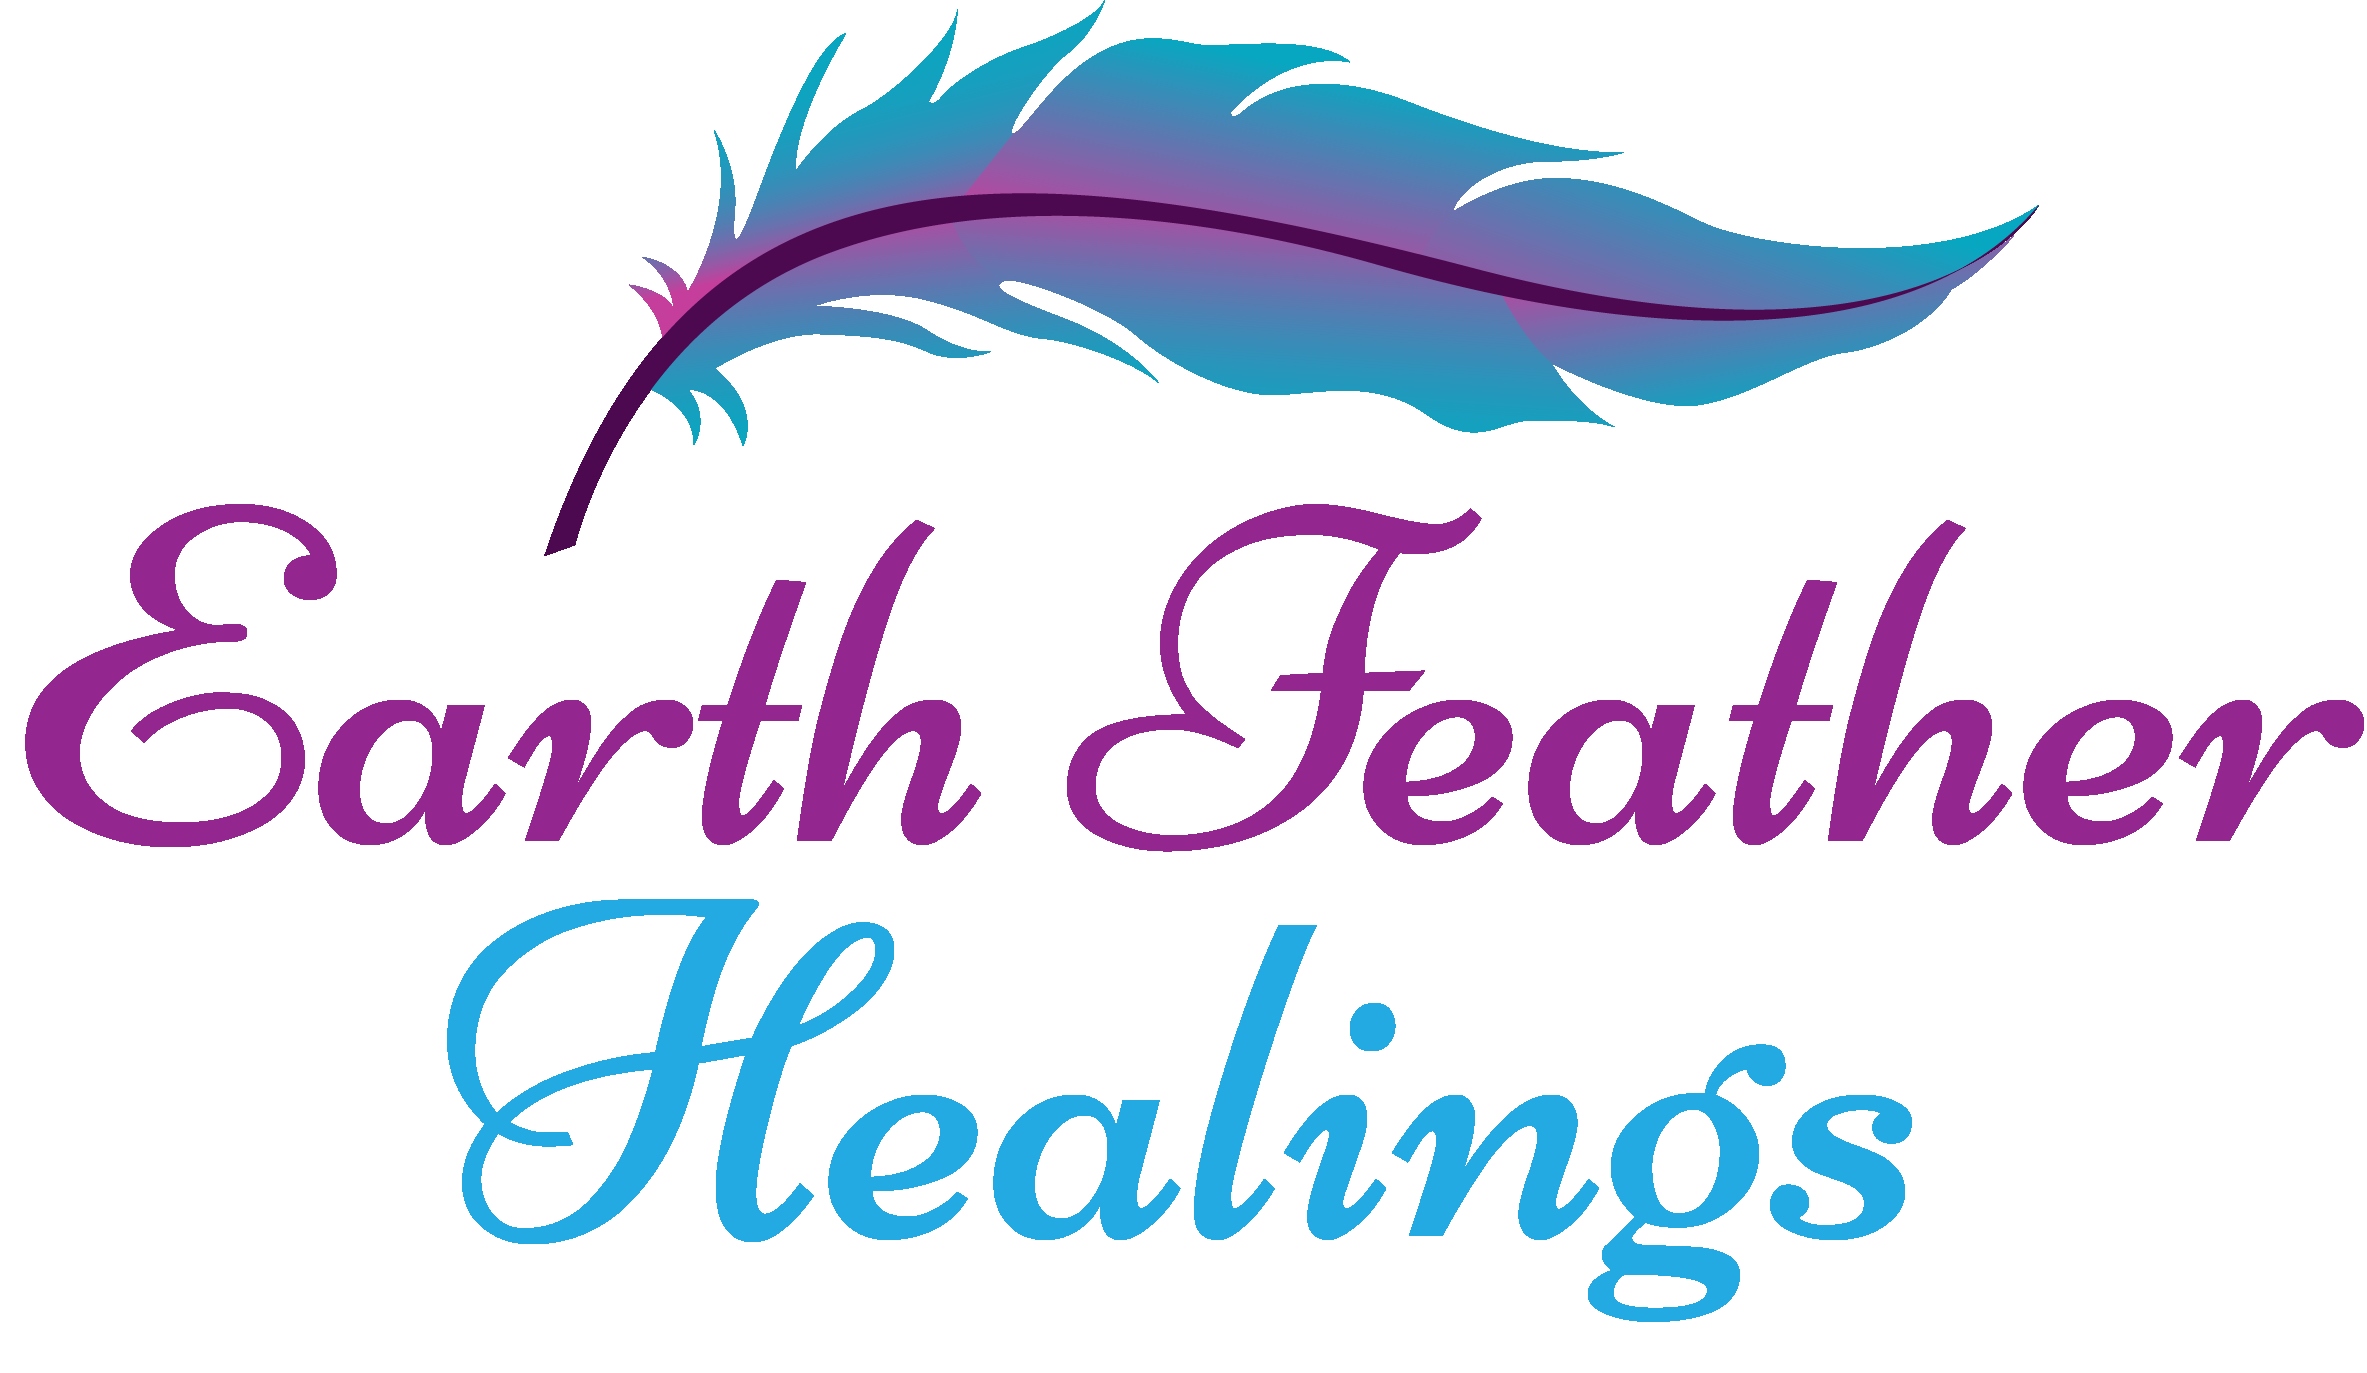 Earth Feather Healings